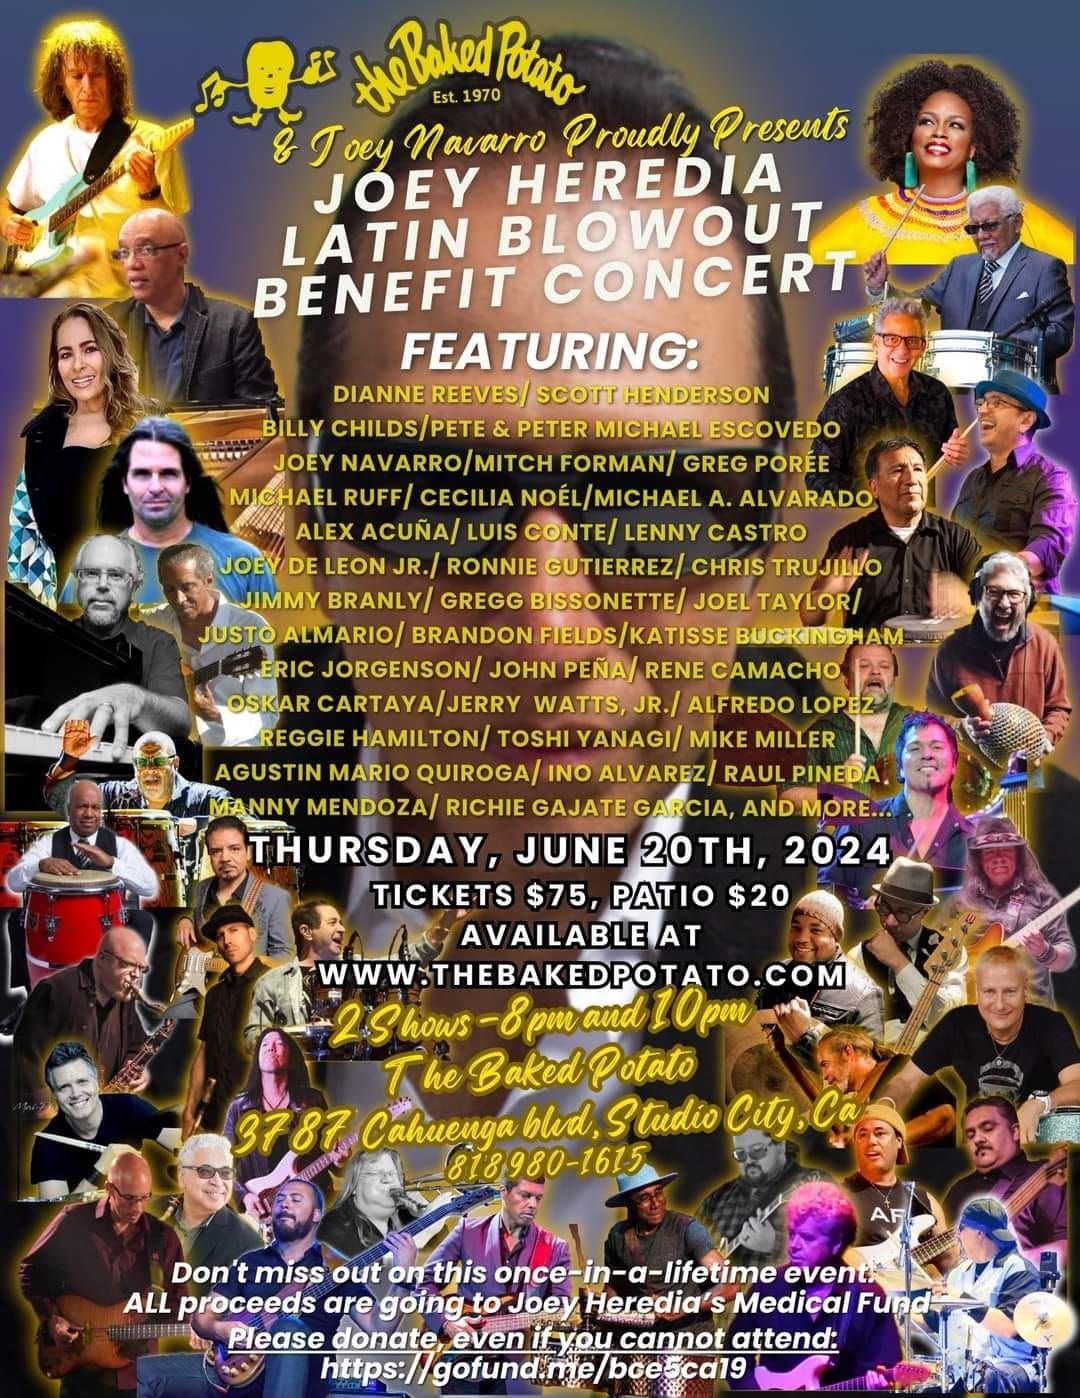 Joey Heredia Latin Blowout benefit concert